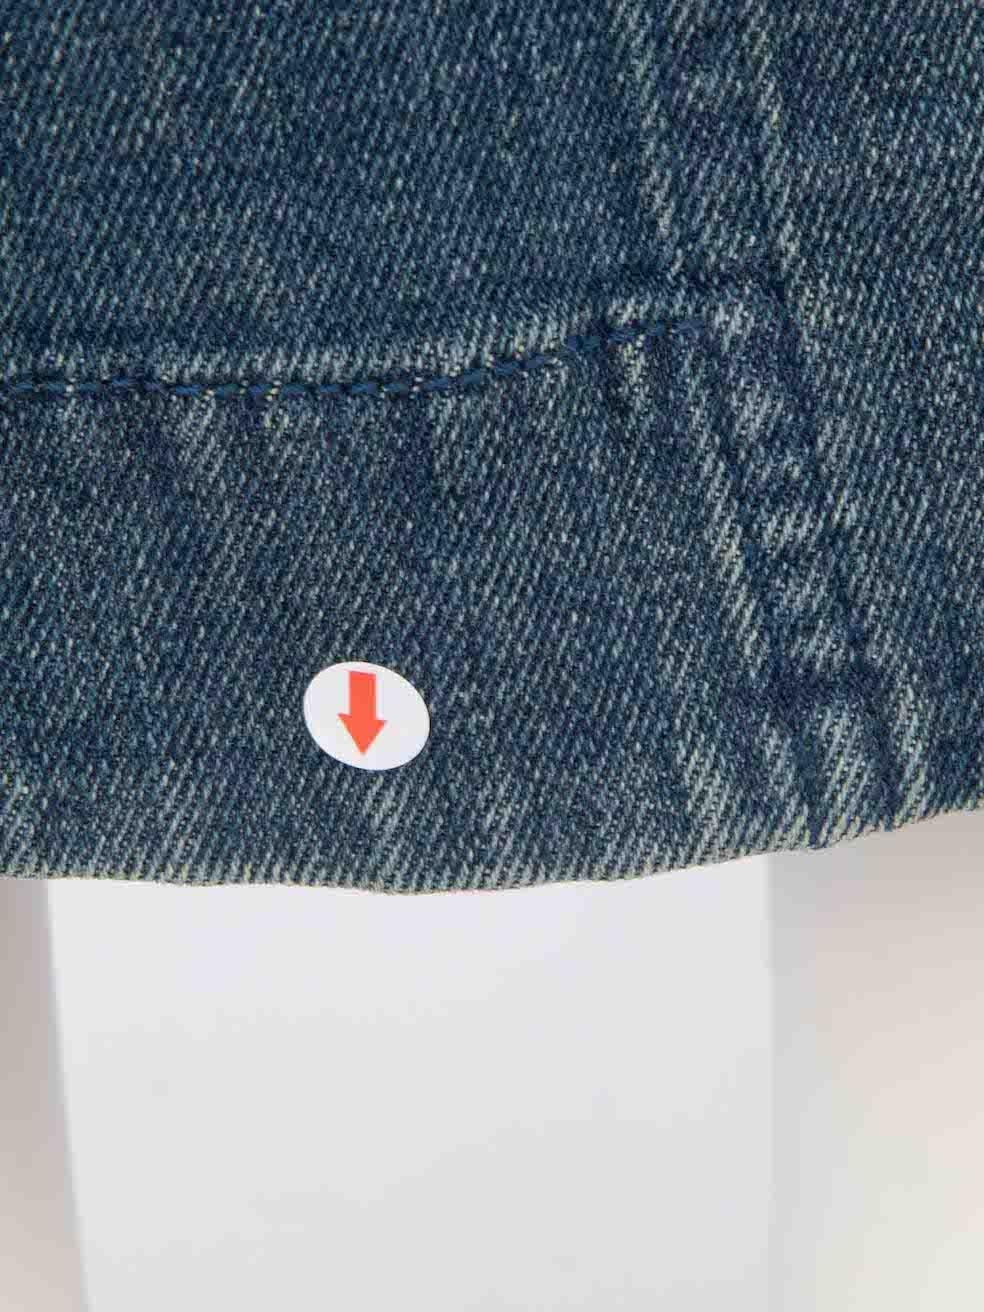 Chloé Blue Denim Buttoned Midi Skirt Size S For Sale 3